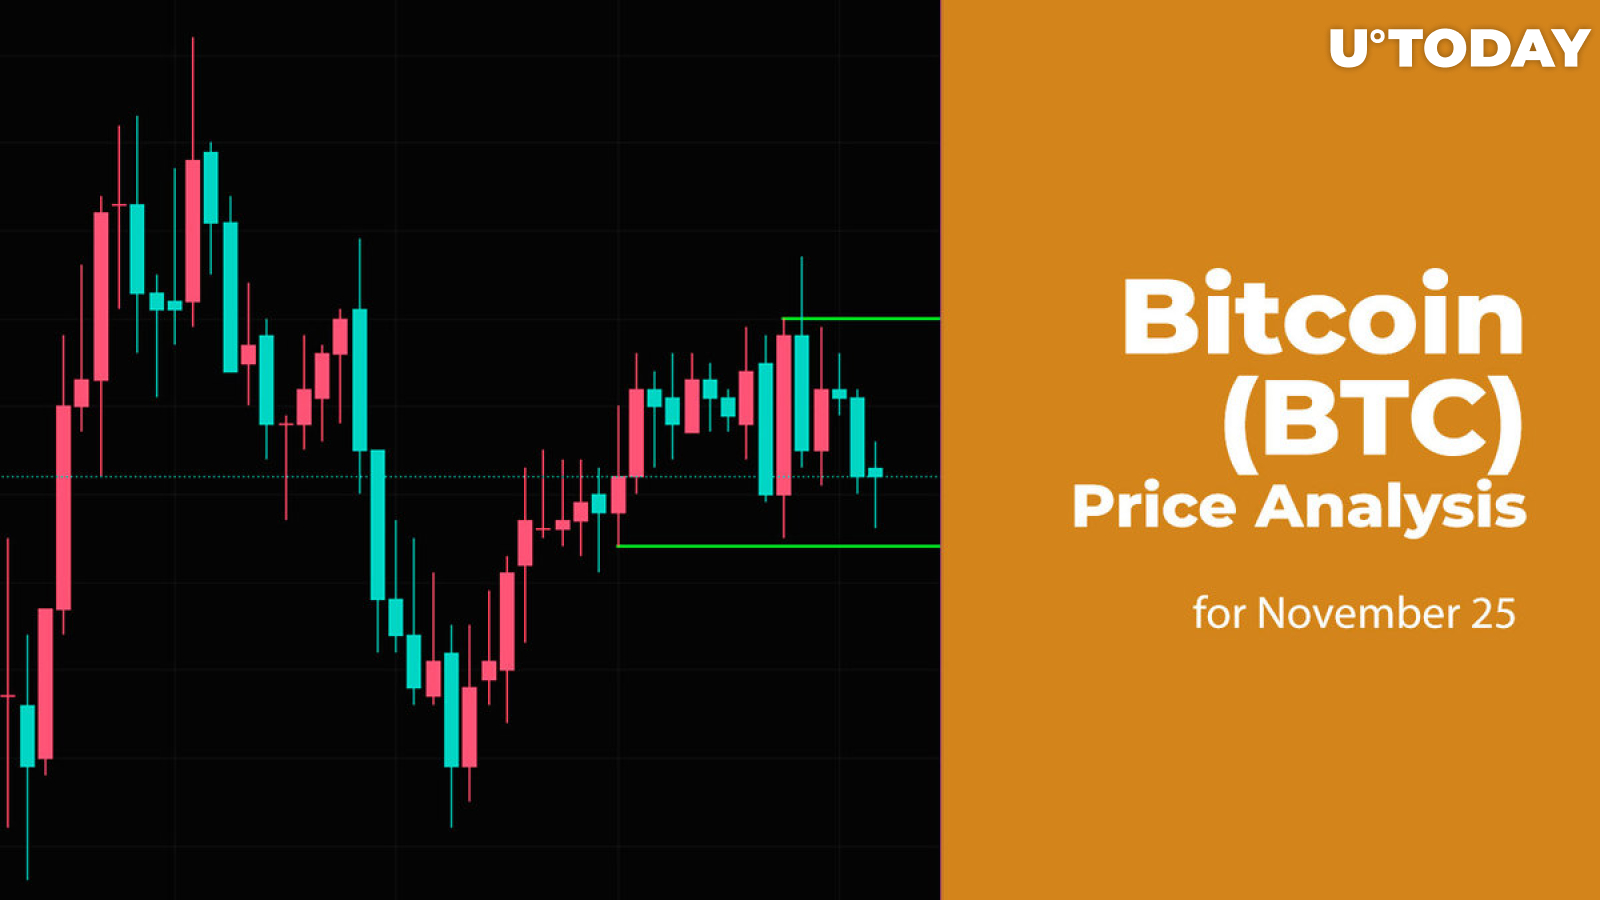 Bitcoin (BTC) Price Analysis for November 25